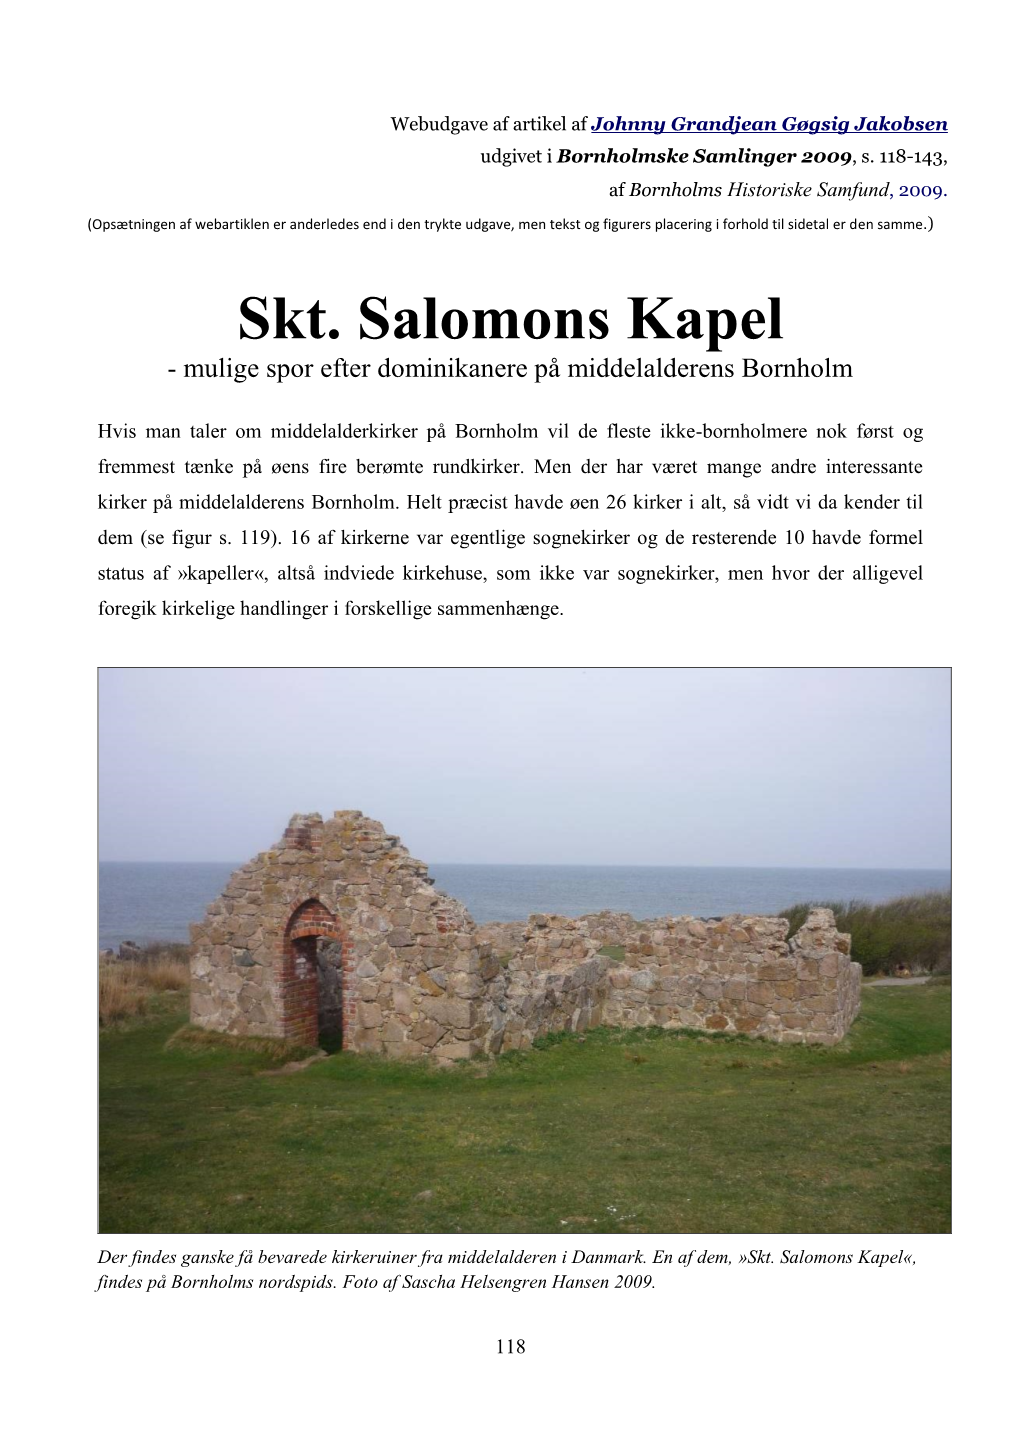 Skt. Salomons Kapel - Mulige Spor Efter Dominikanere På Middelalderens Bornholm